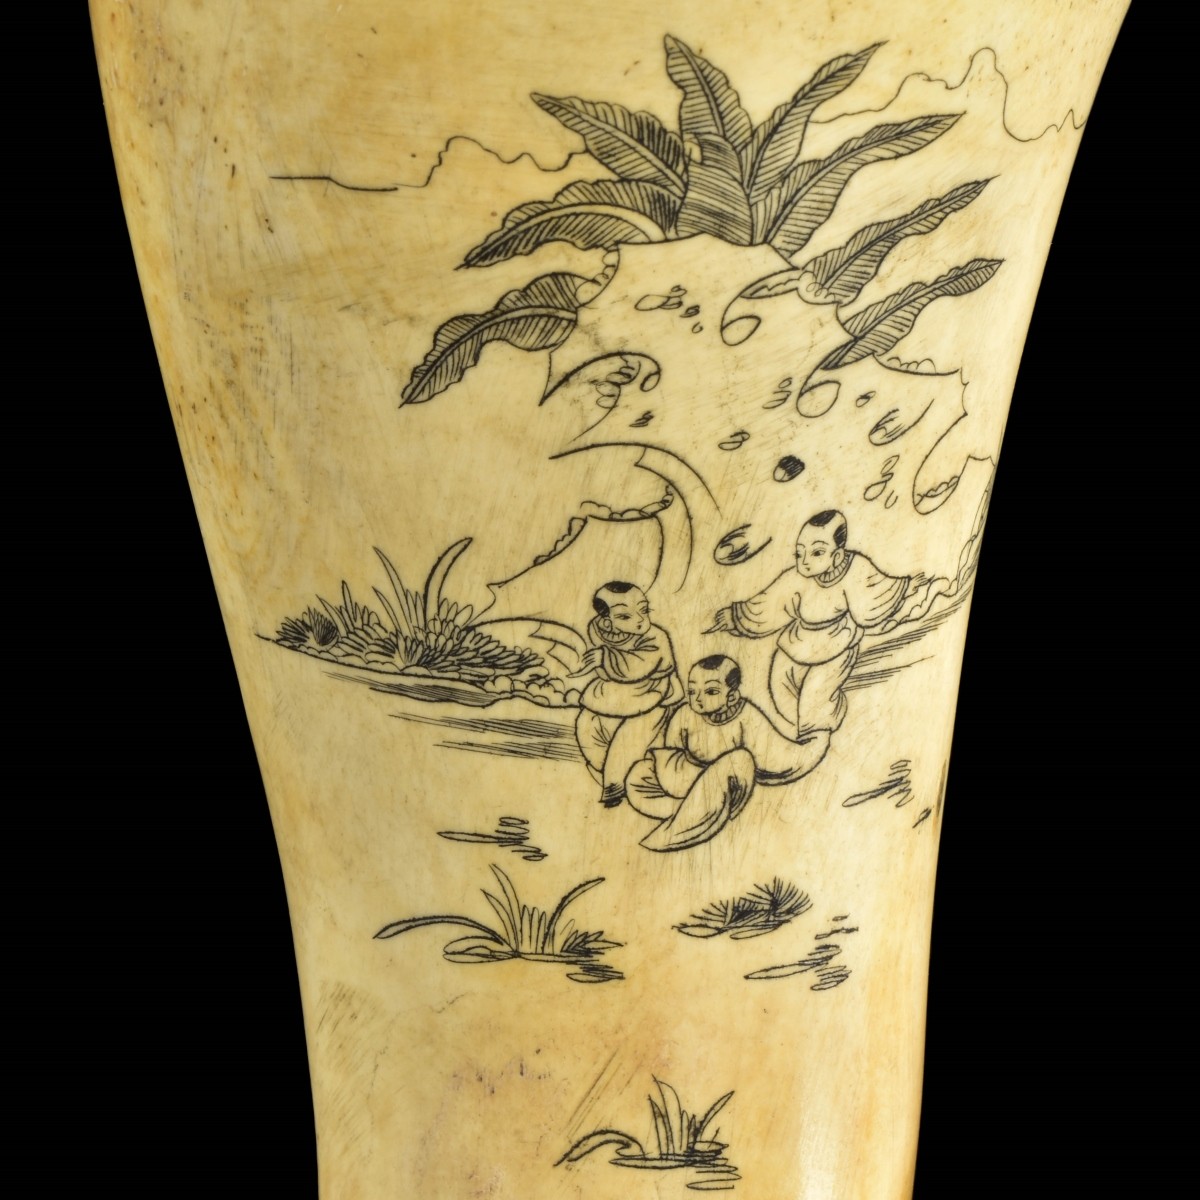 Antique Chinese Etched Bone Vase